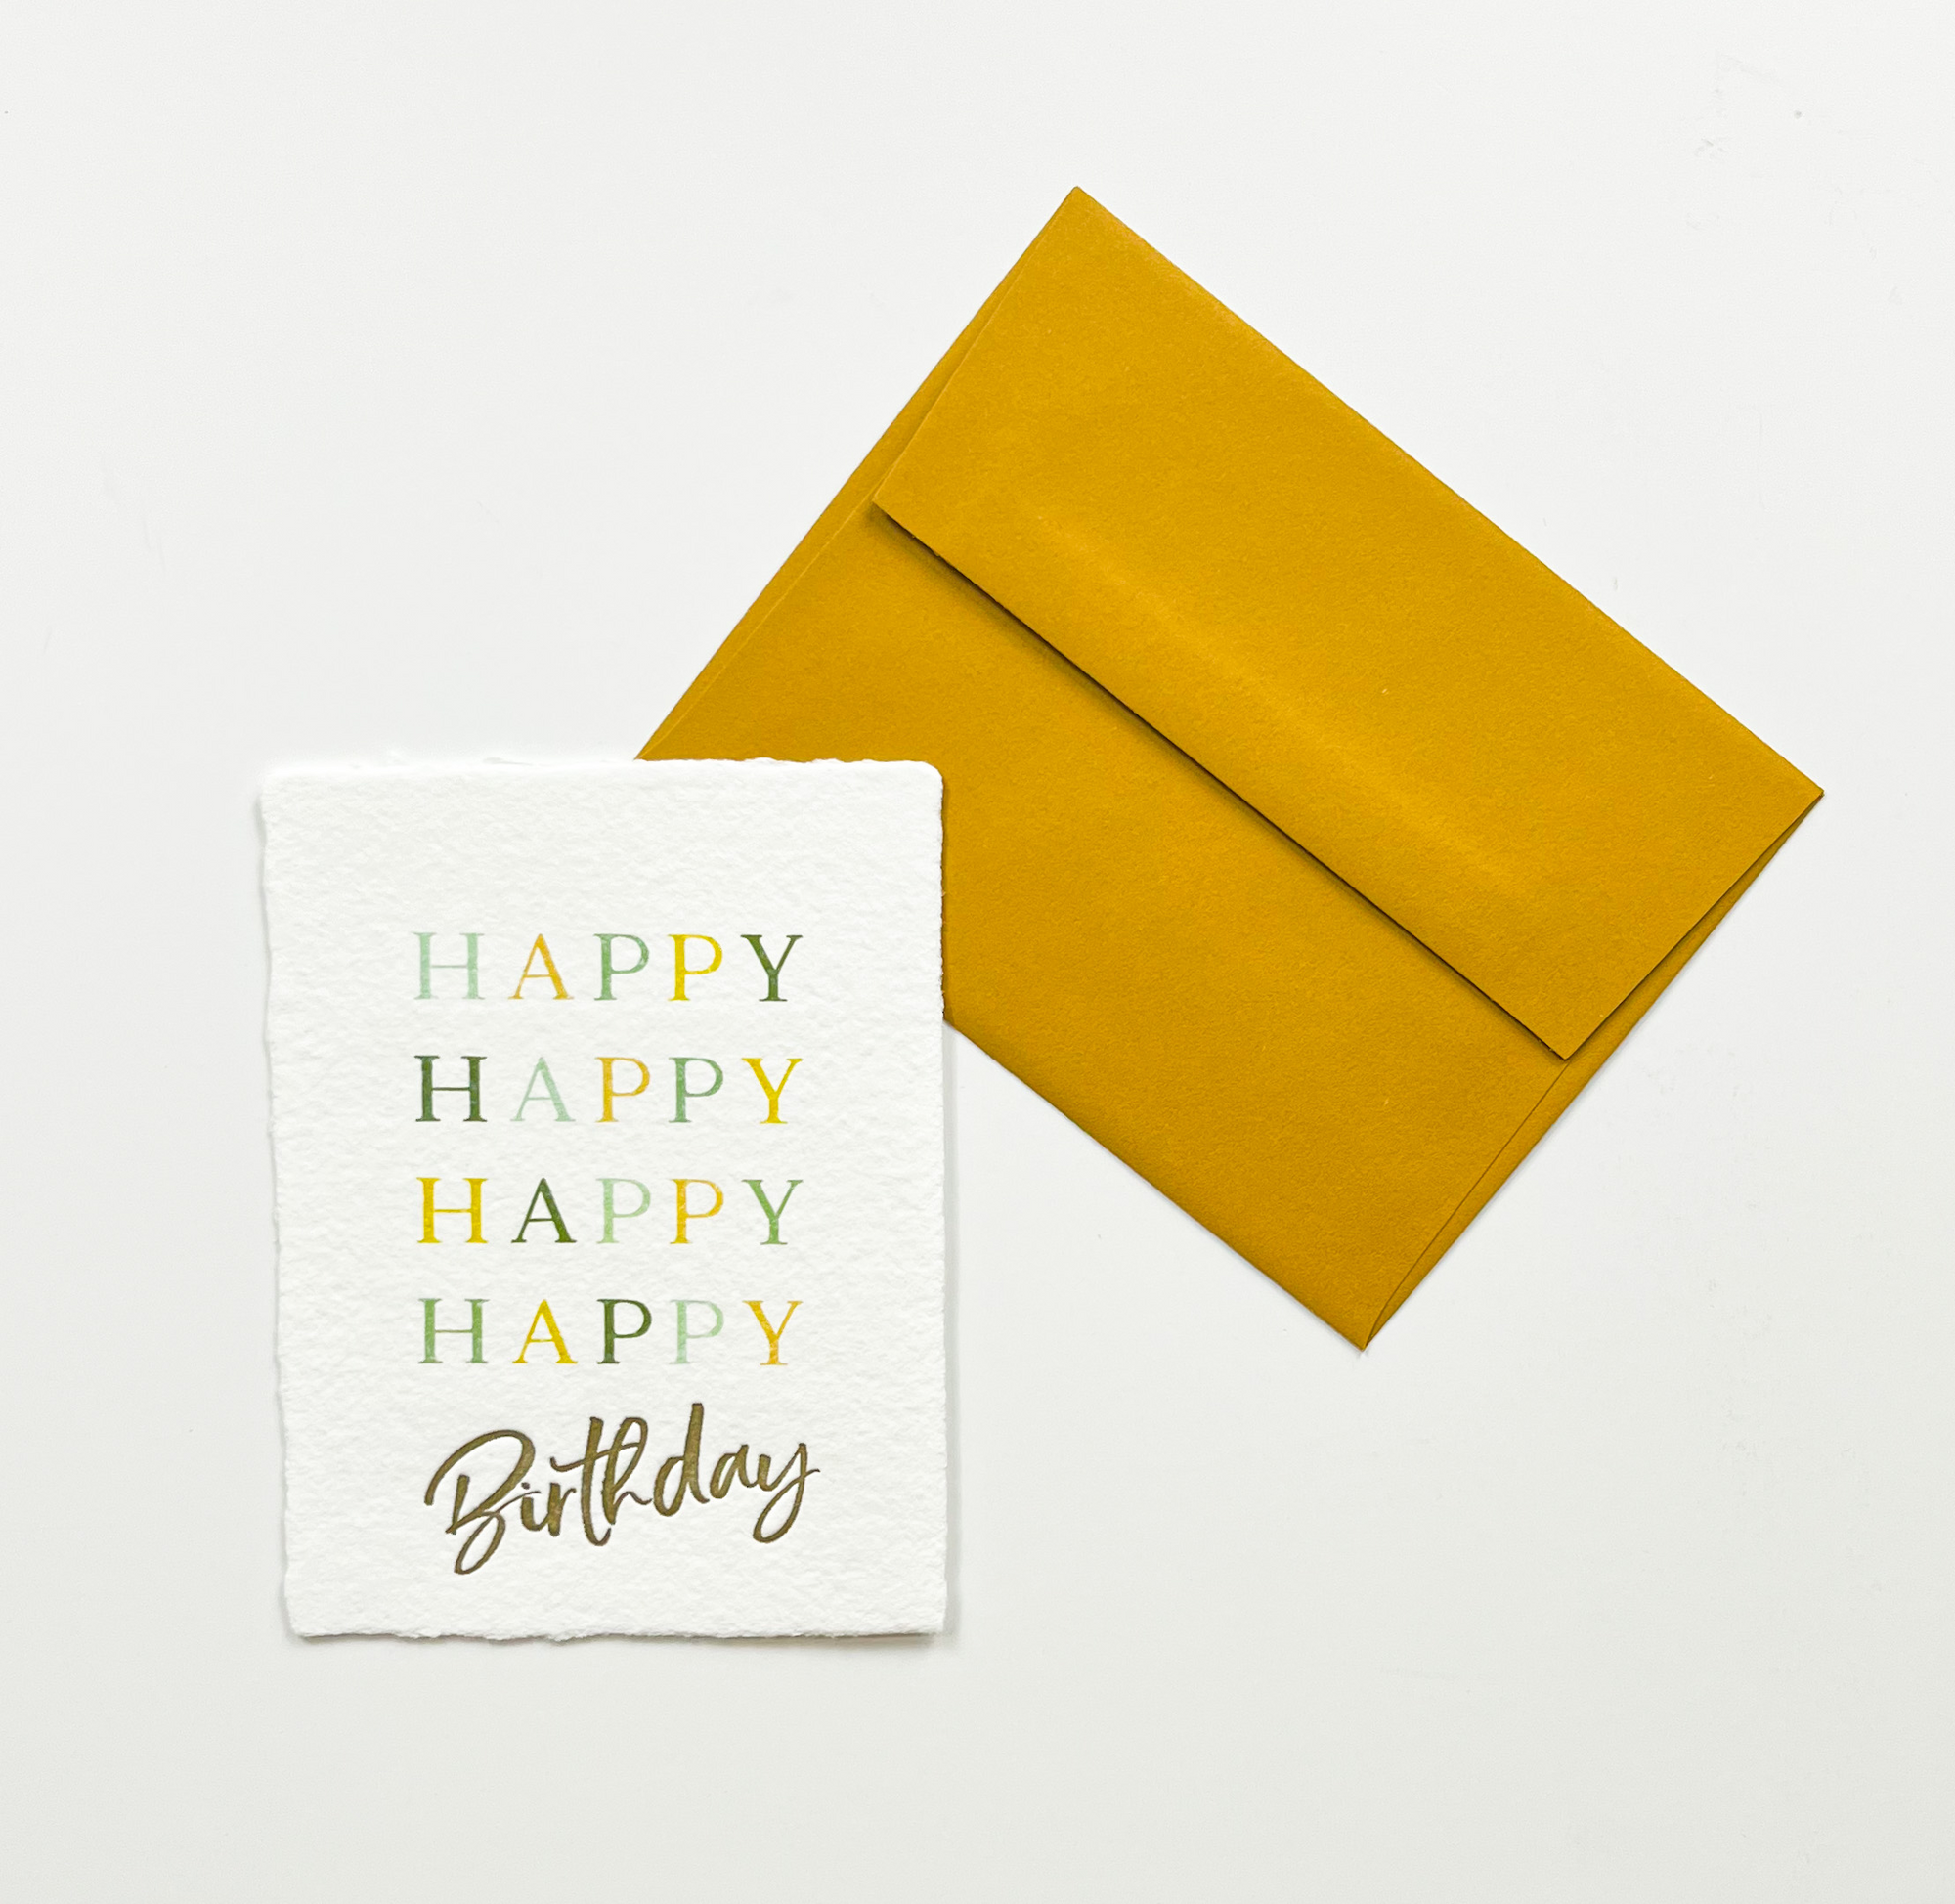 "Happy Happy Happy Happy Birthday" Greeting Card